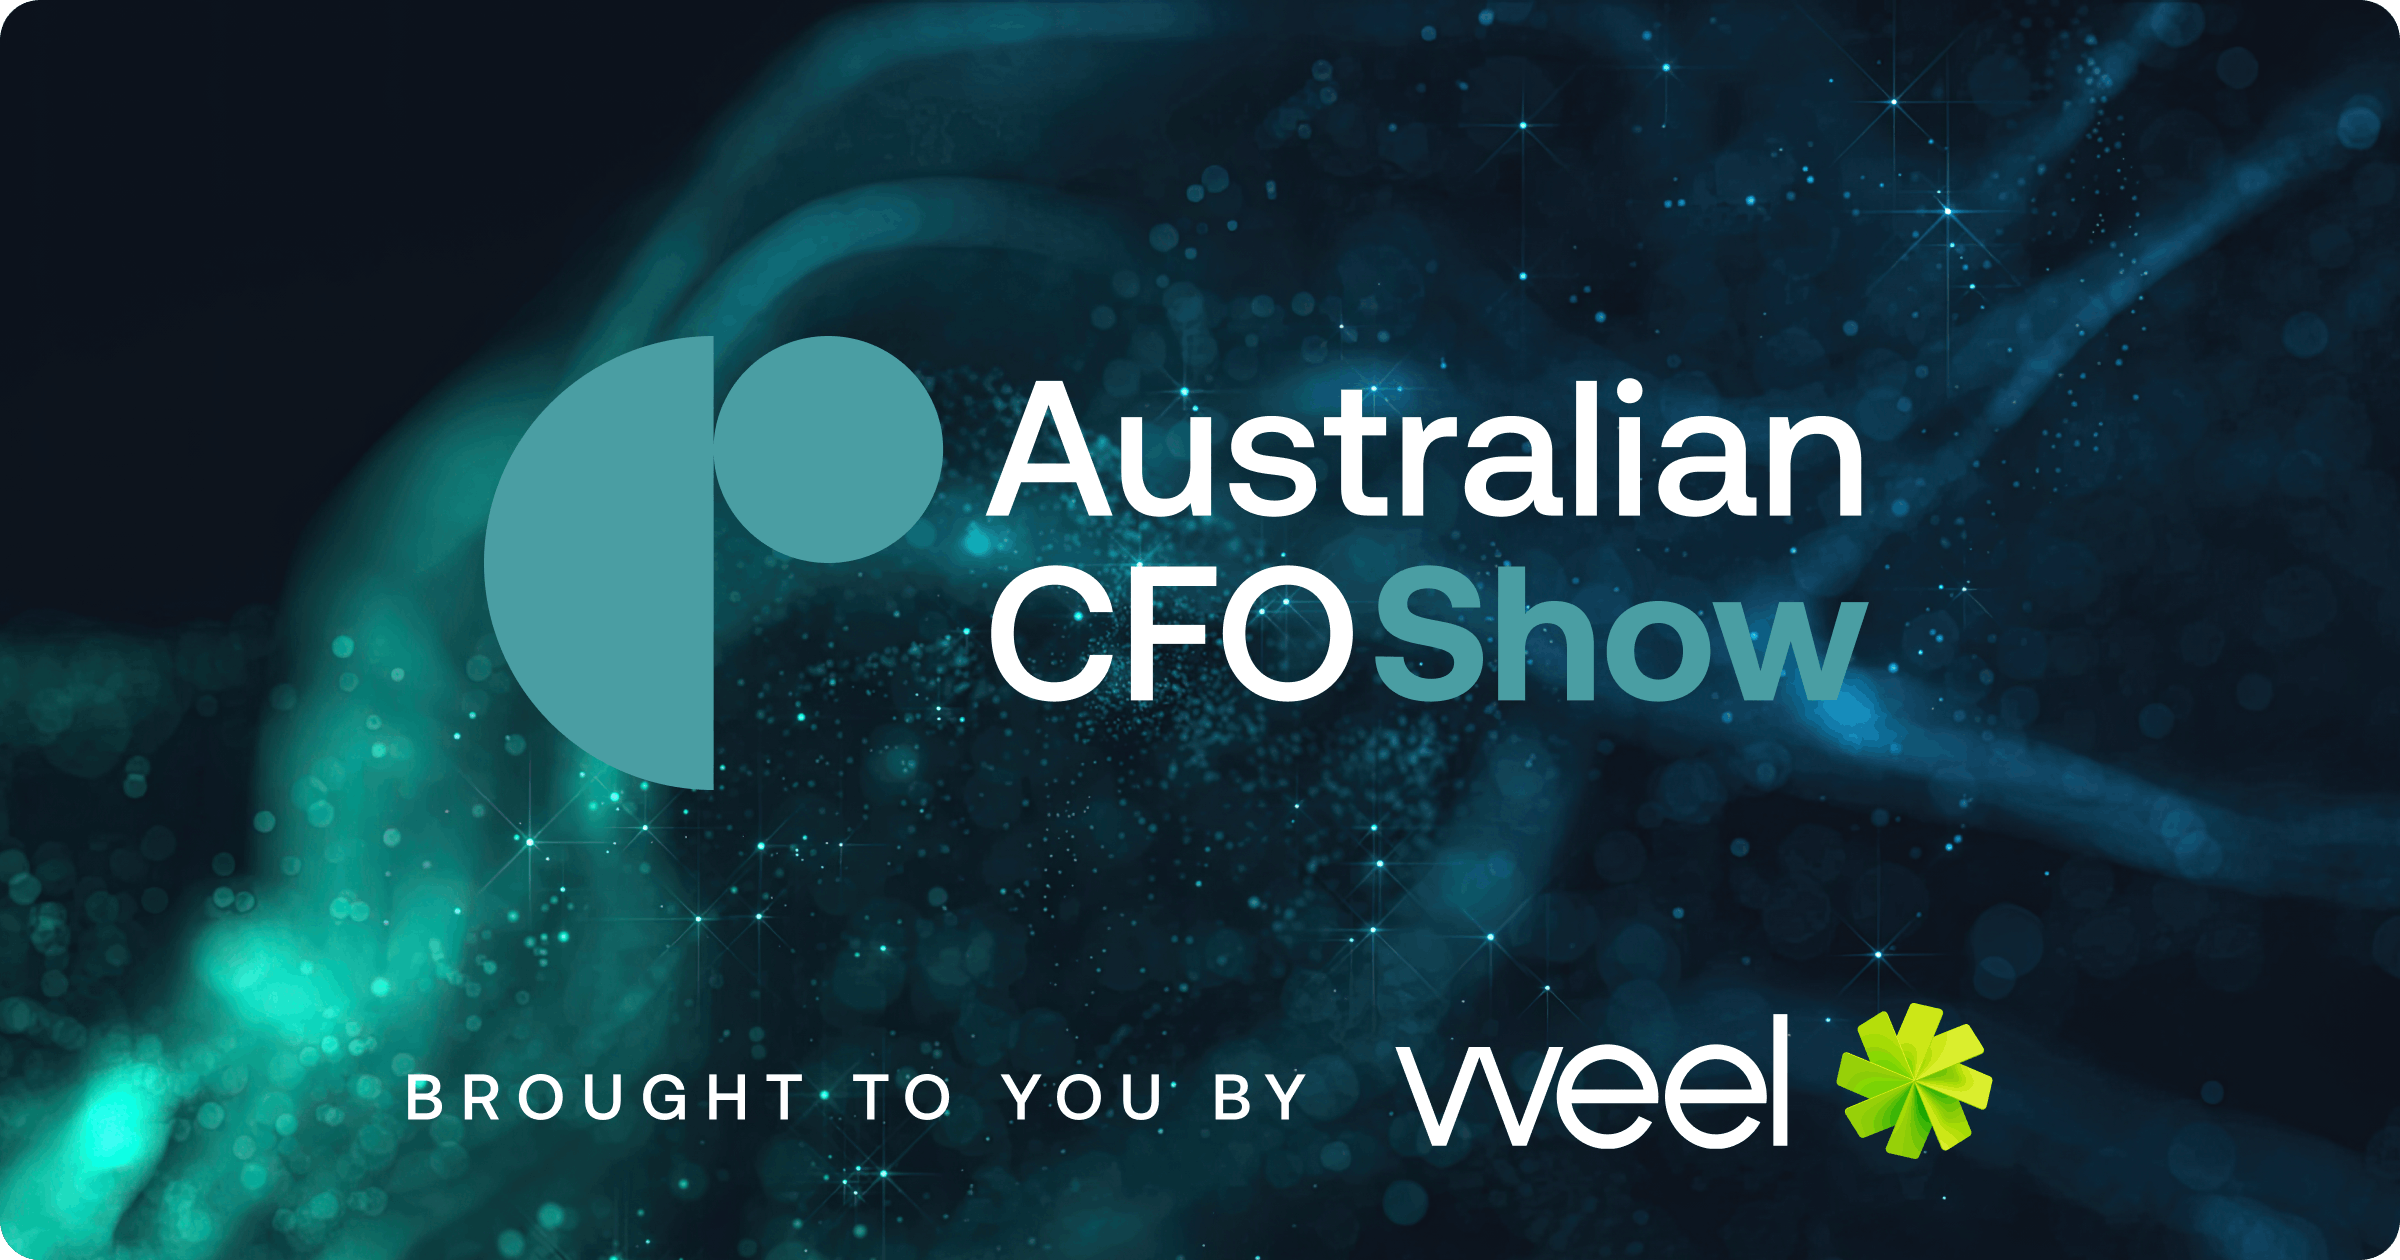 The Australian CFO Show